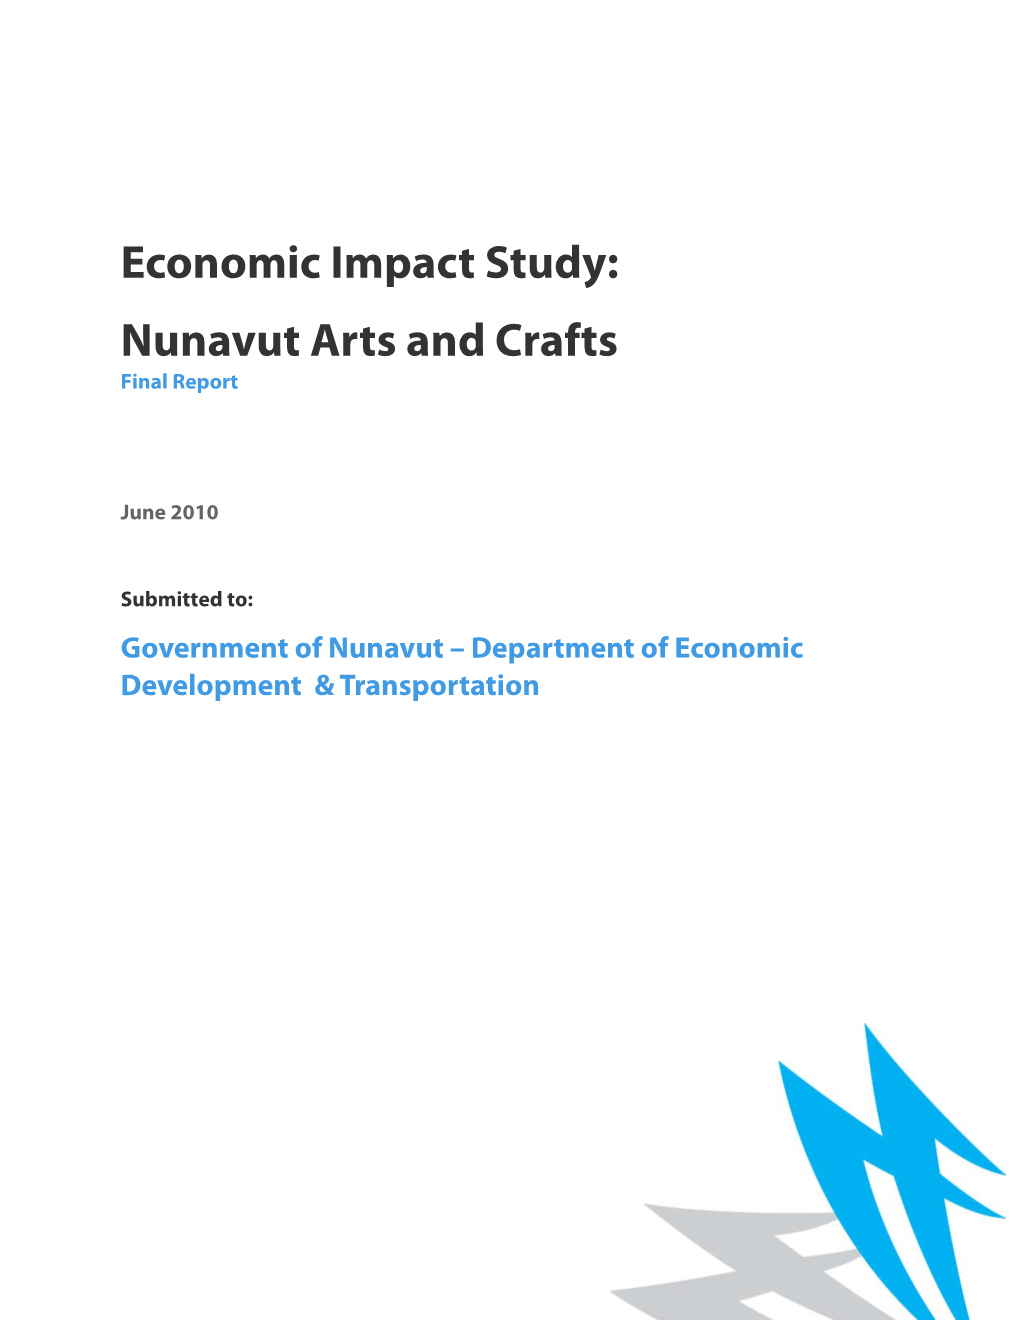 Economic Impact Study: Nunavut Arts and Crafts Final Report